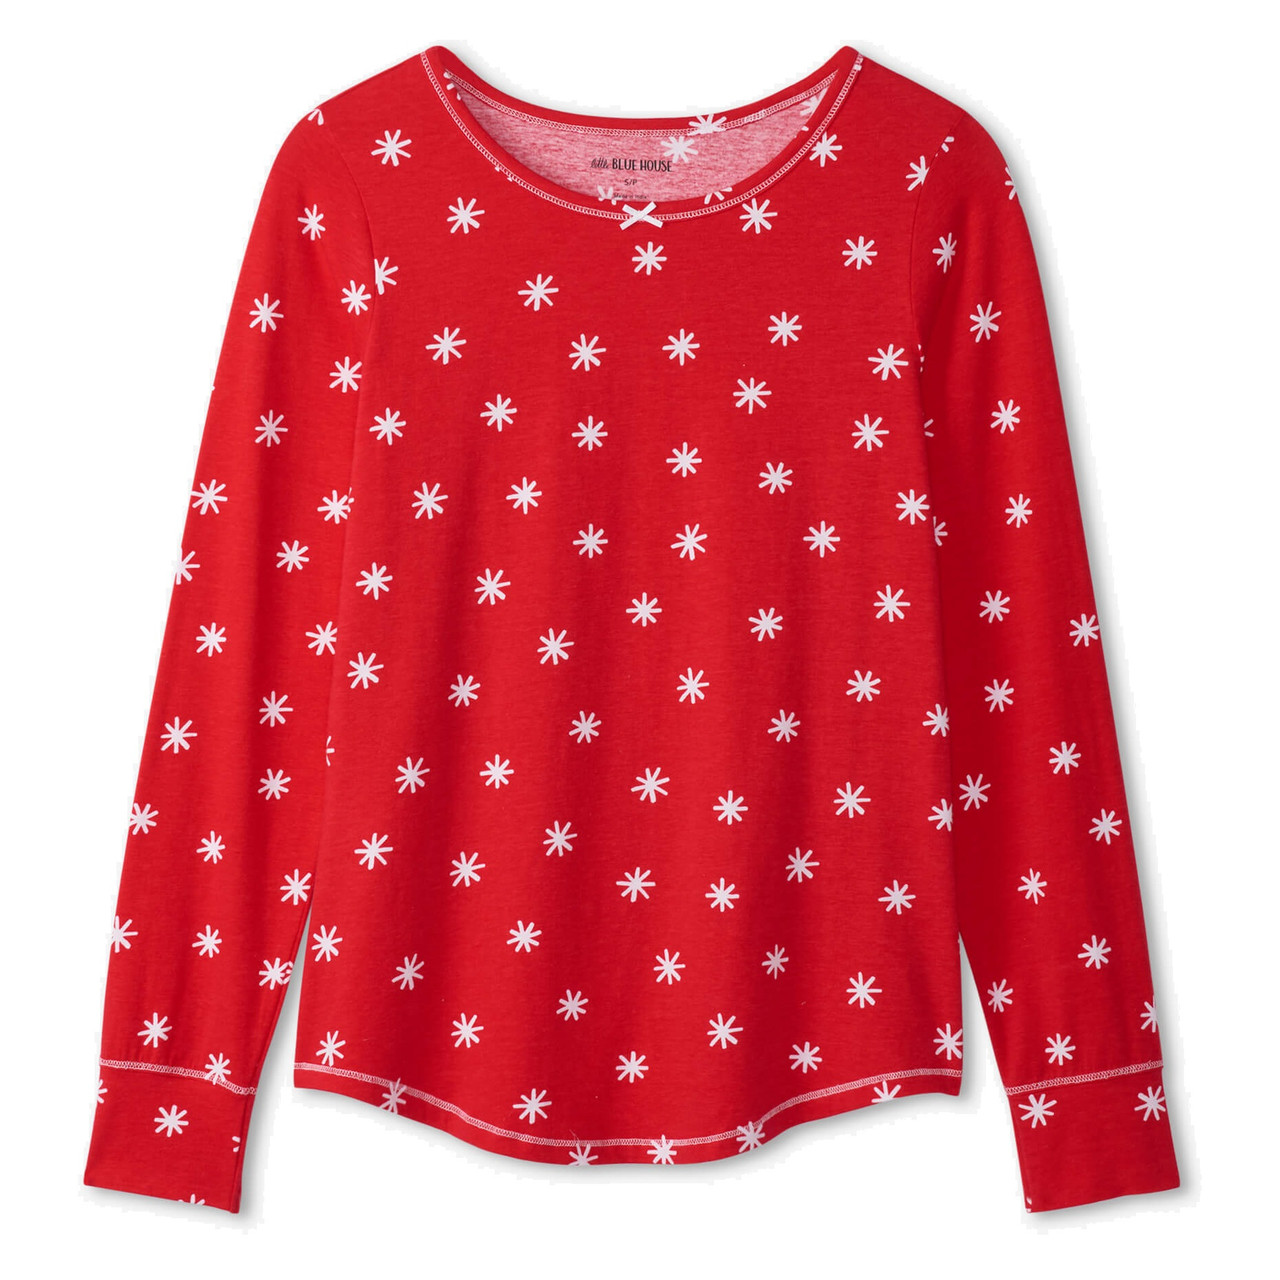 12 Days of Christmas Red Pajama Set - Hatley CA